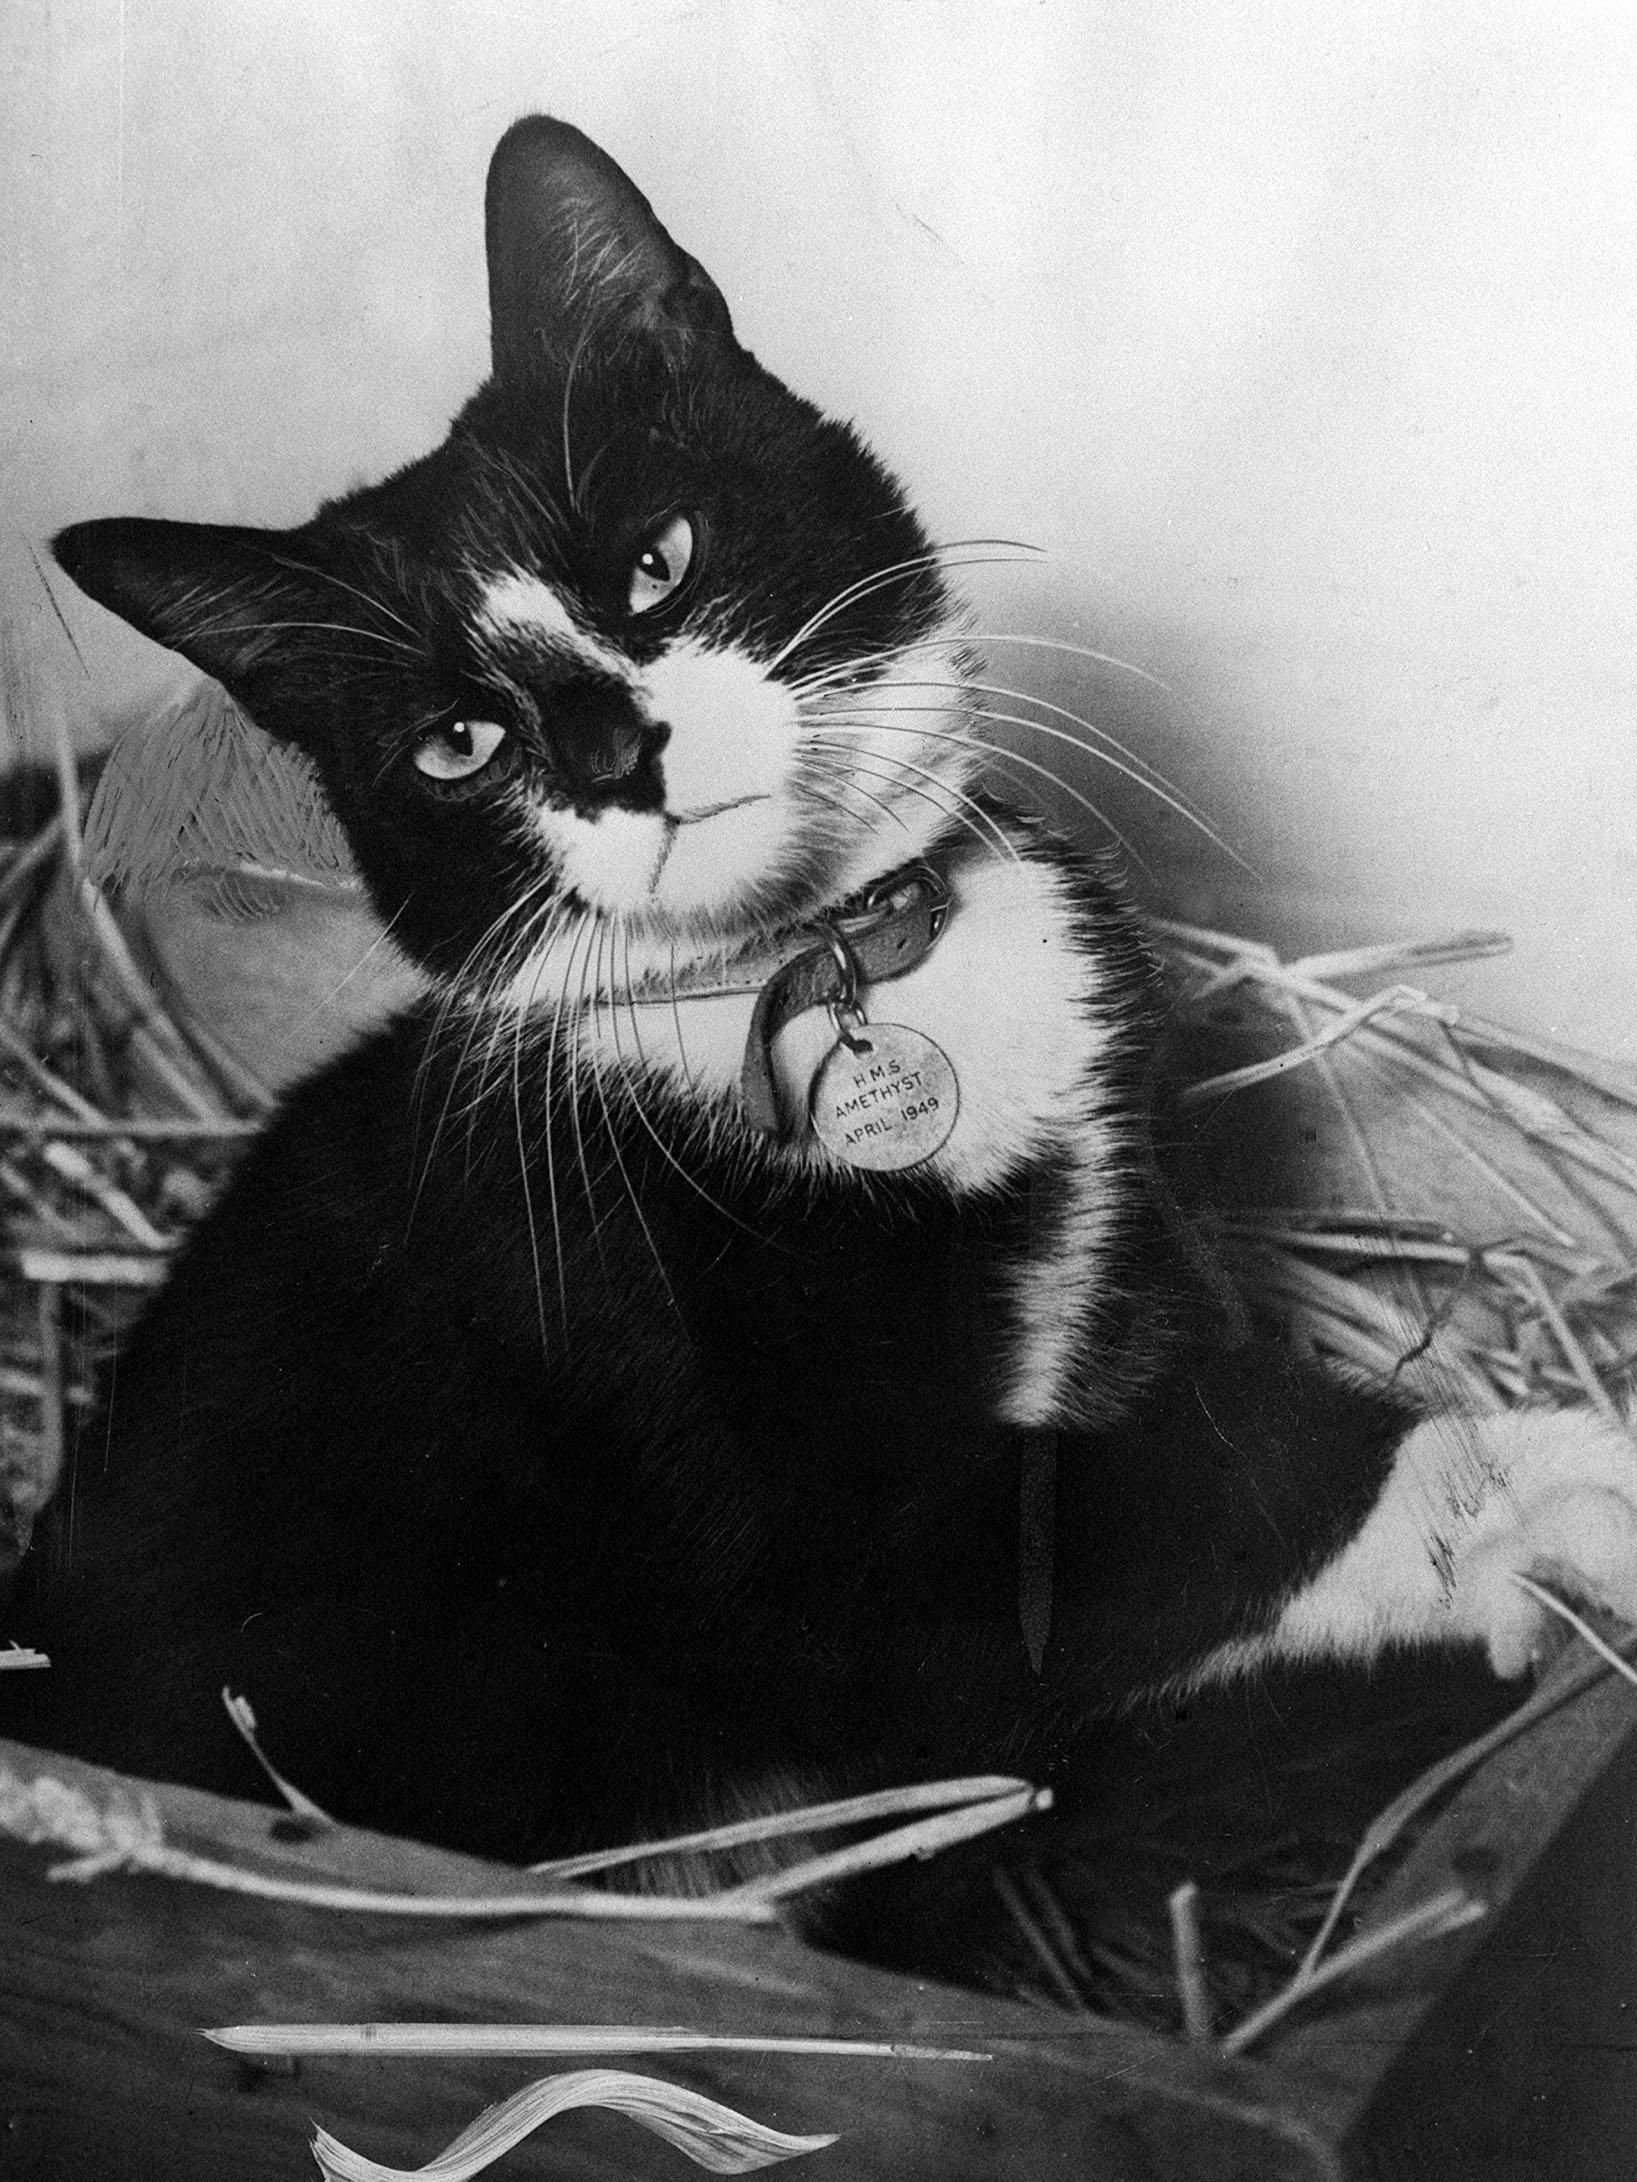 Animals - Ships Cat 'Simon' Awarded the Dickin Medal